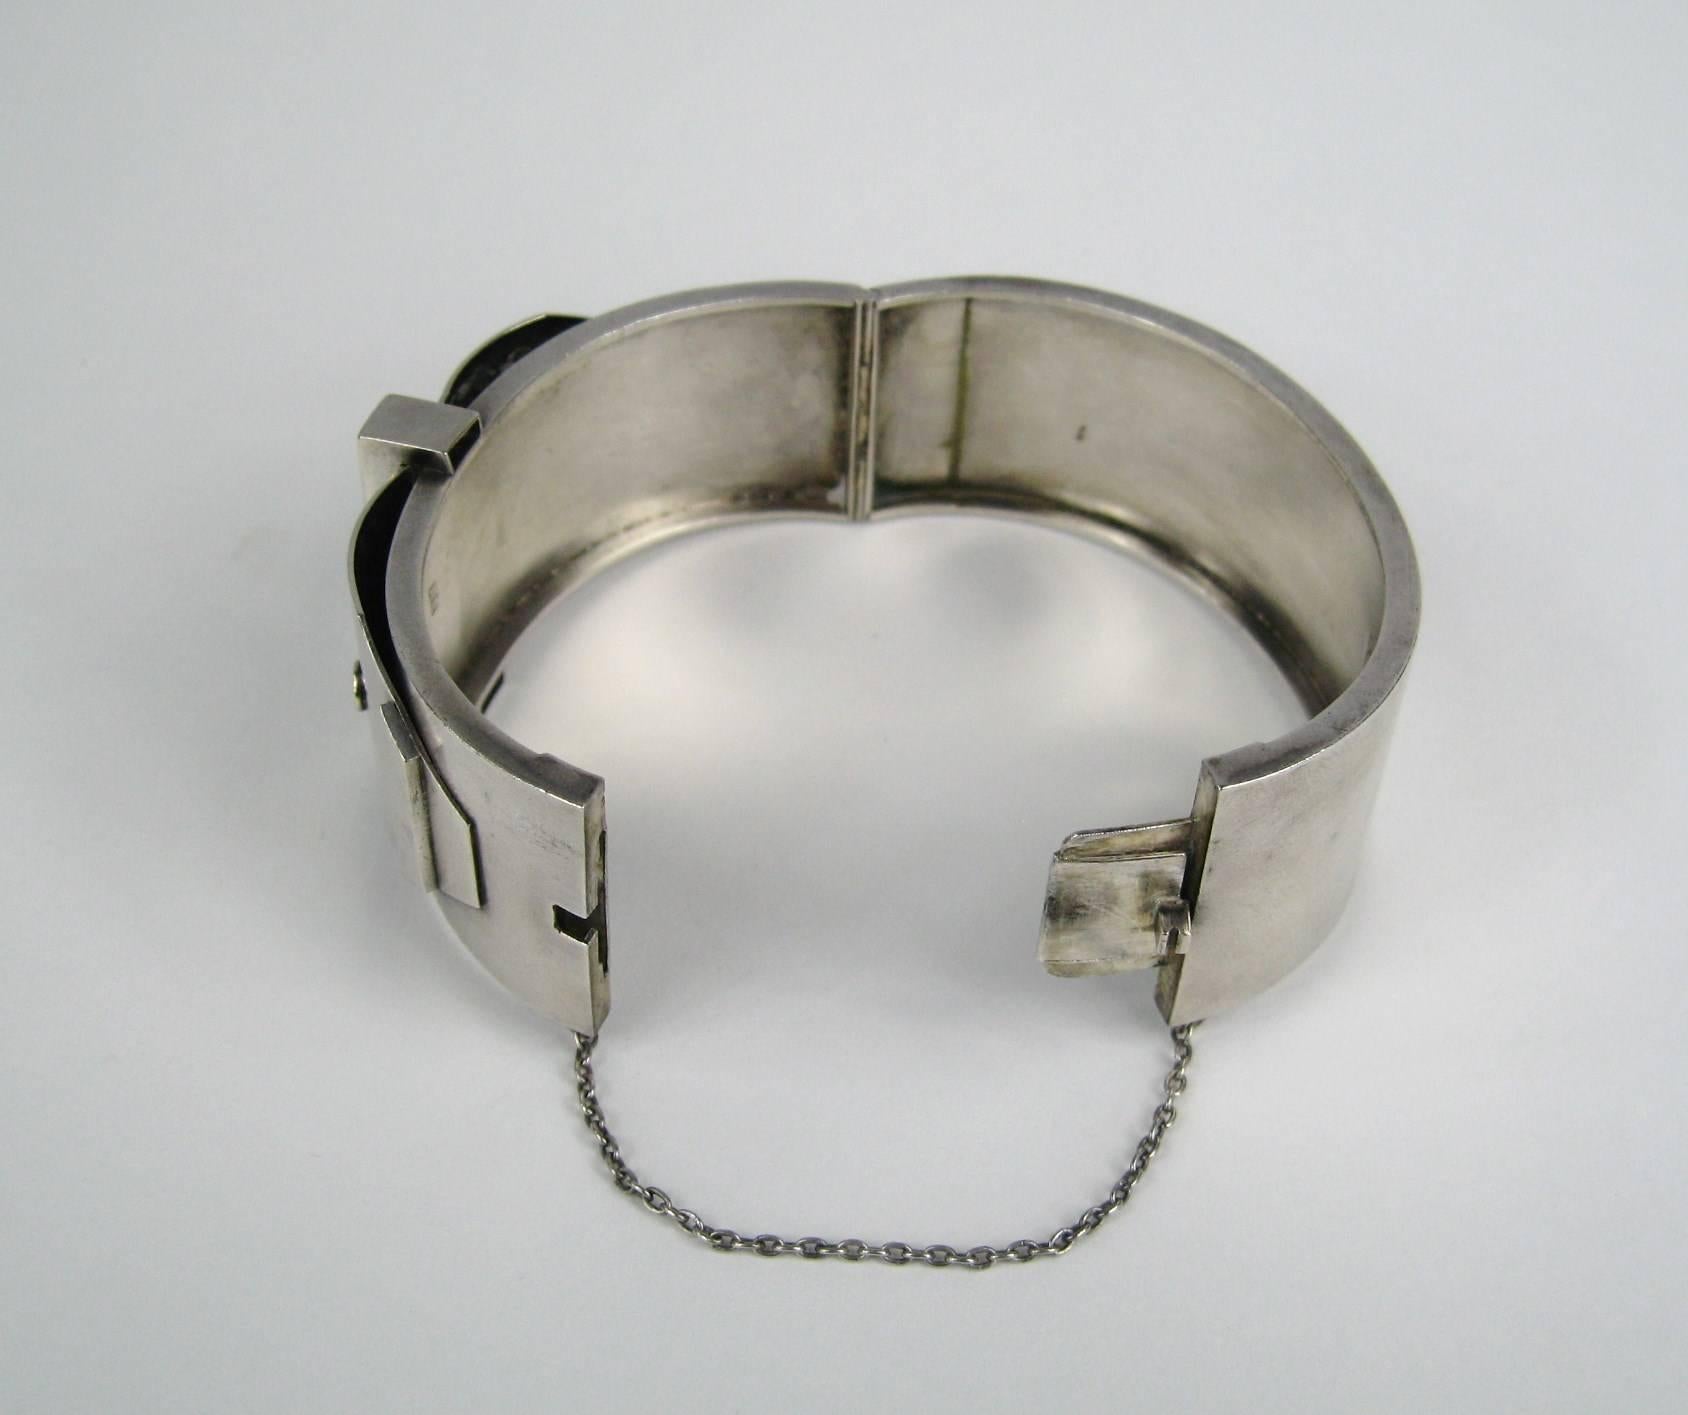  Sterling Silver Bracelet Cuff Bangle Victorian English  1